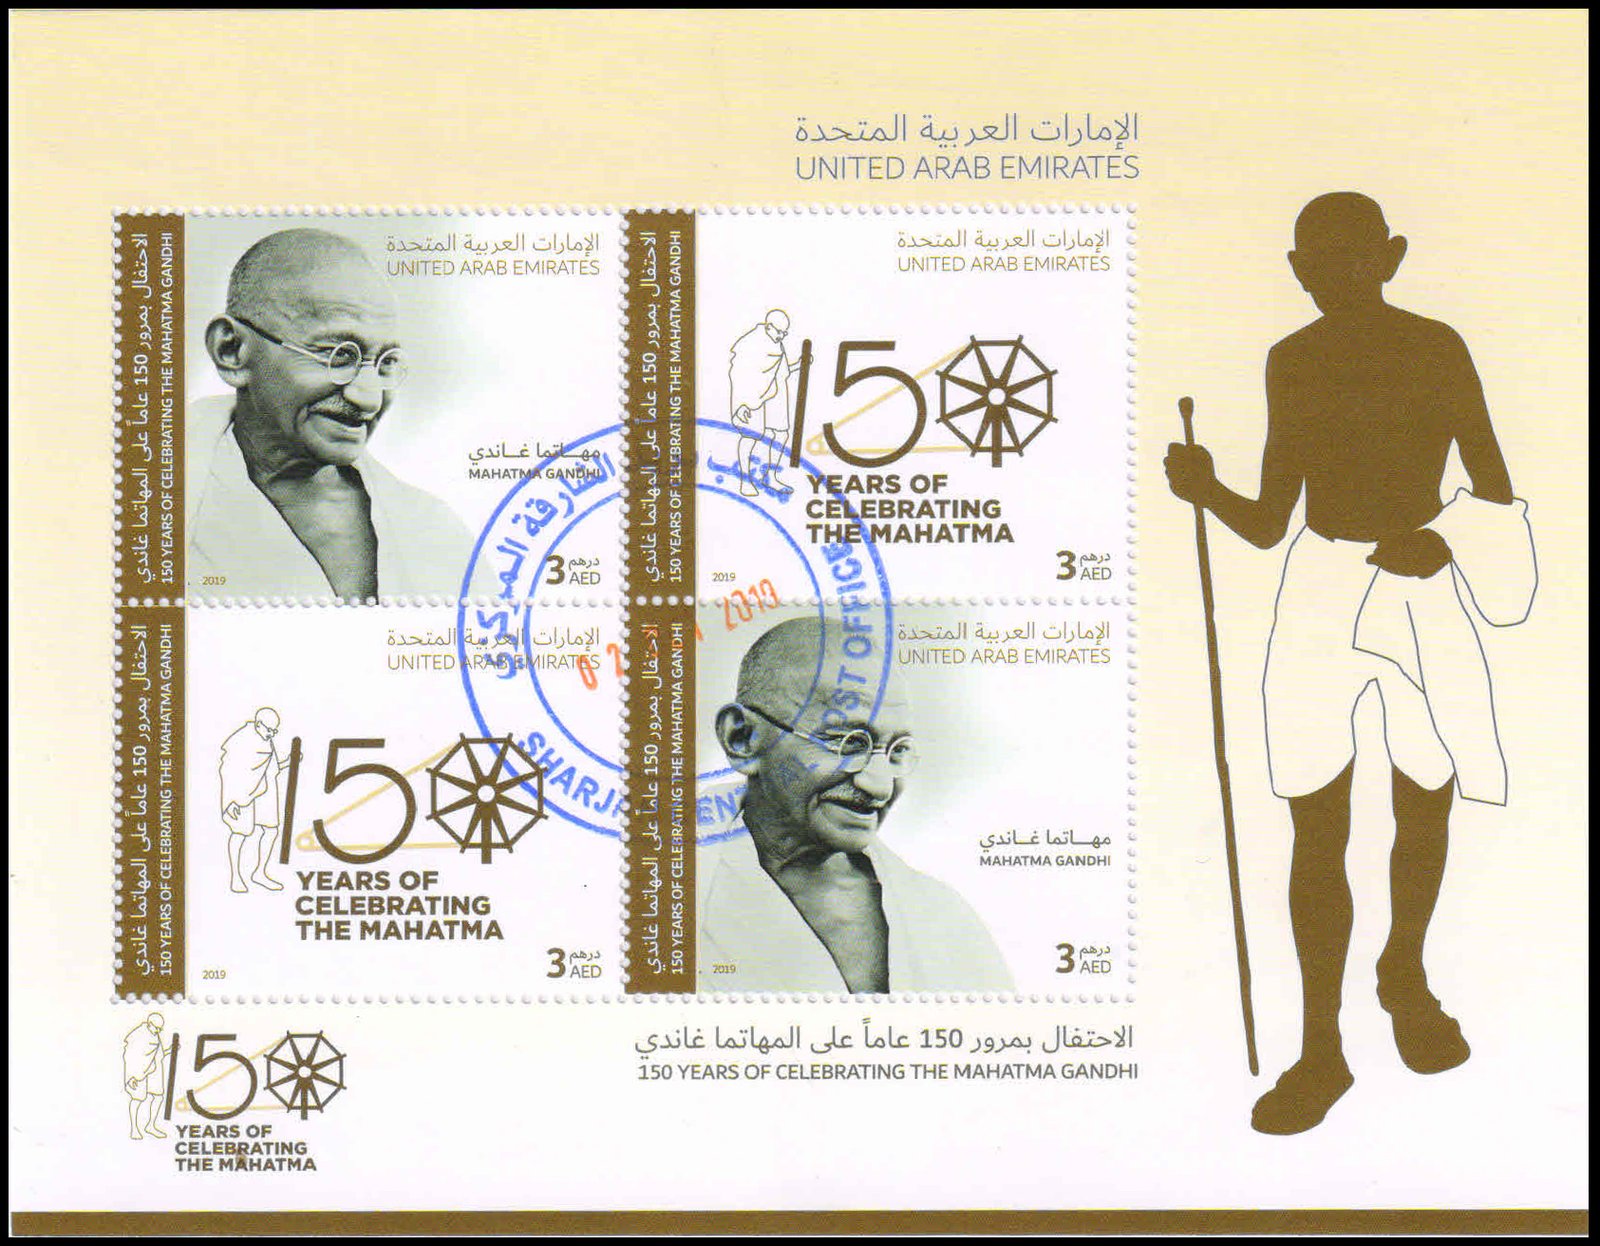 UNITED ARAB EMIRATES 2019 - Mahatma Gandhi, 150th Birth Anniversary, Date Cancellation, 2 October 2019 Sharjah Post Office, Miniature Sheet  of 4 Stamps